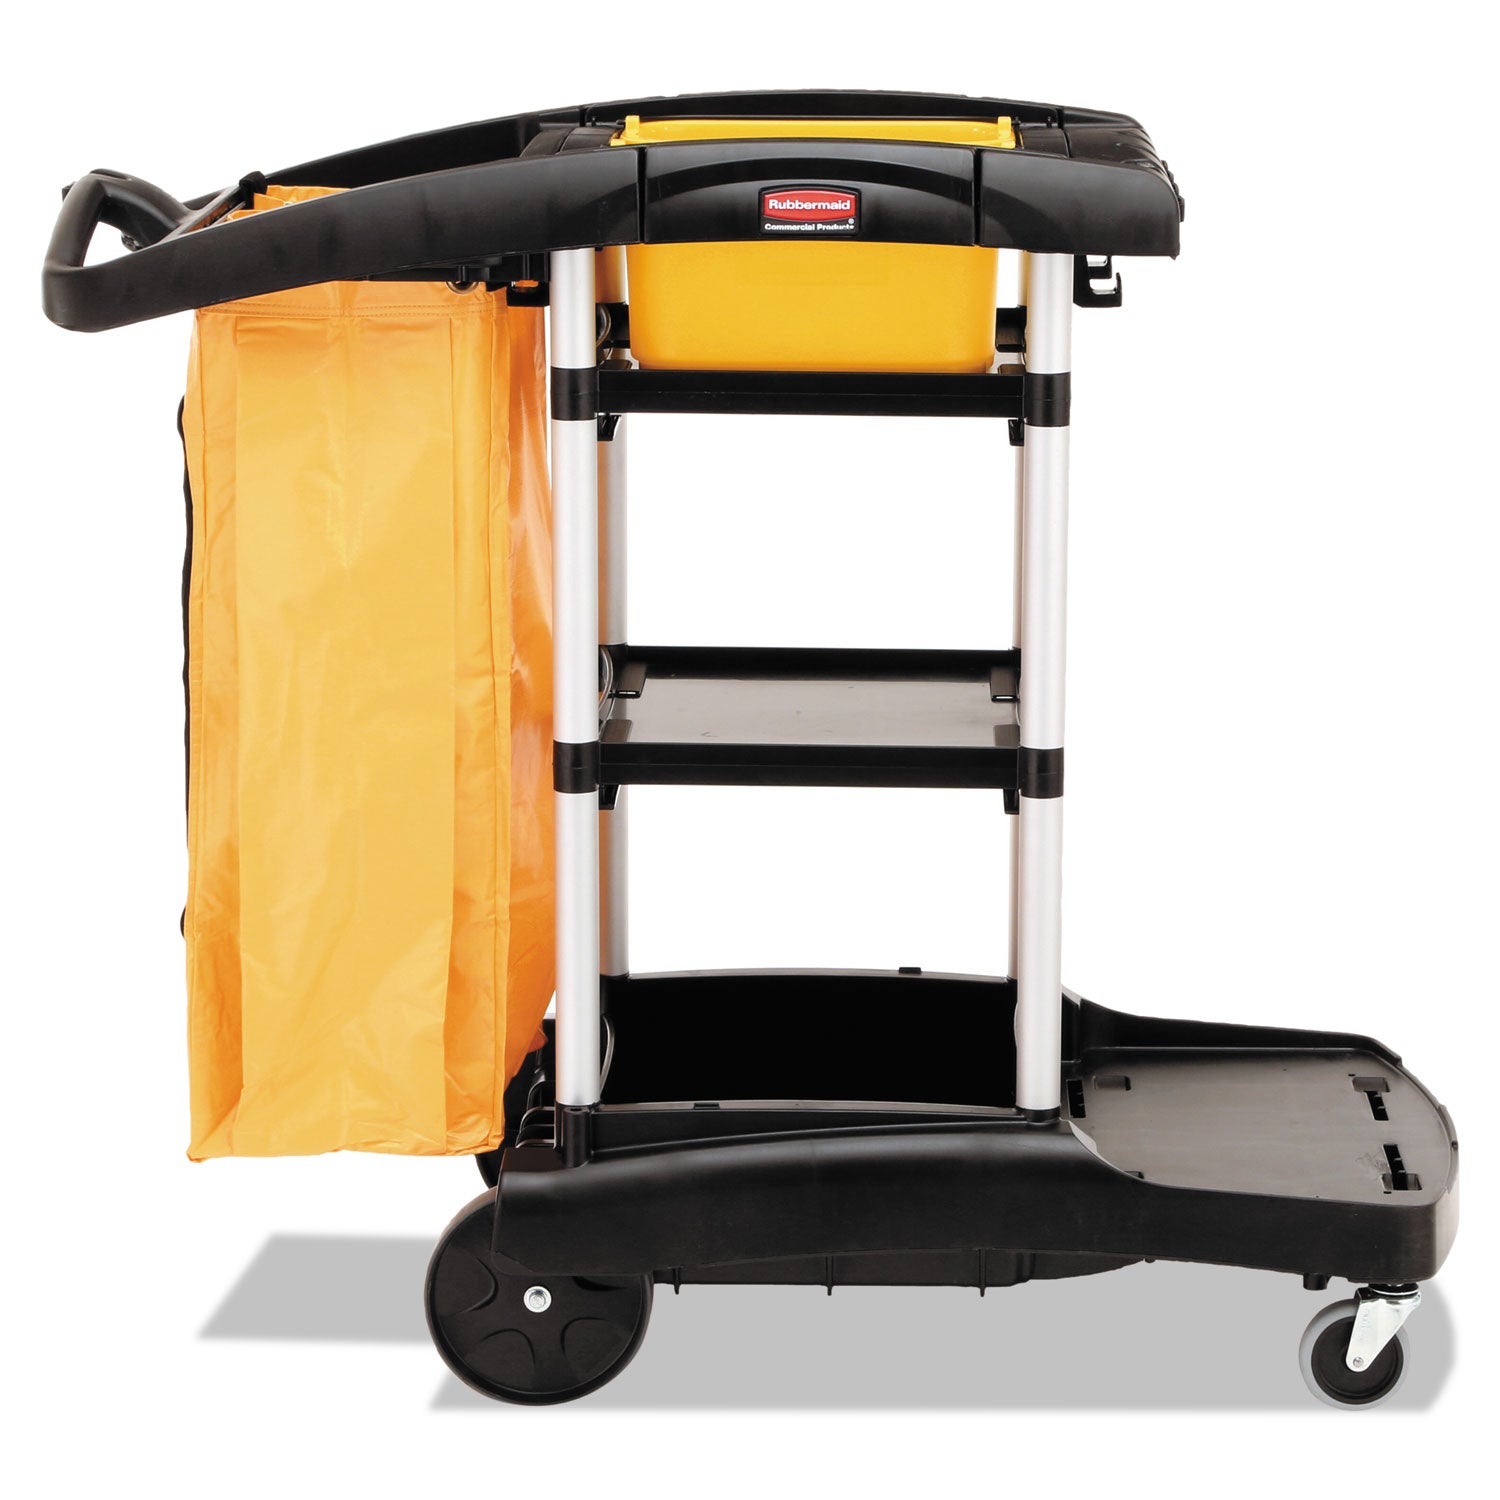 High Capacity Cleaning Cart, Plastic, 4 Shelves, 2 Bins, 21.75" x 49.75" x 38.38", Black - 